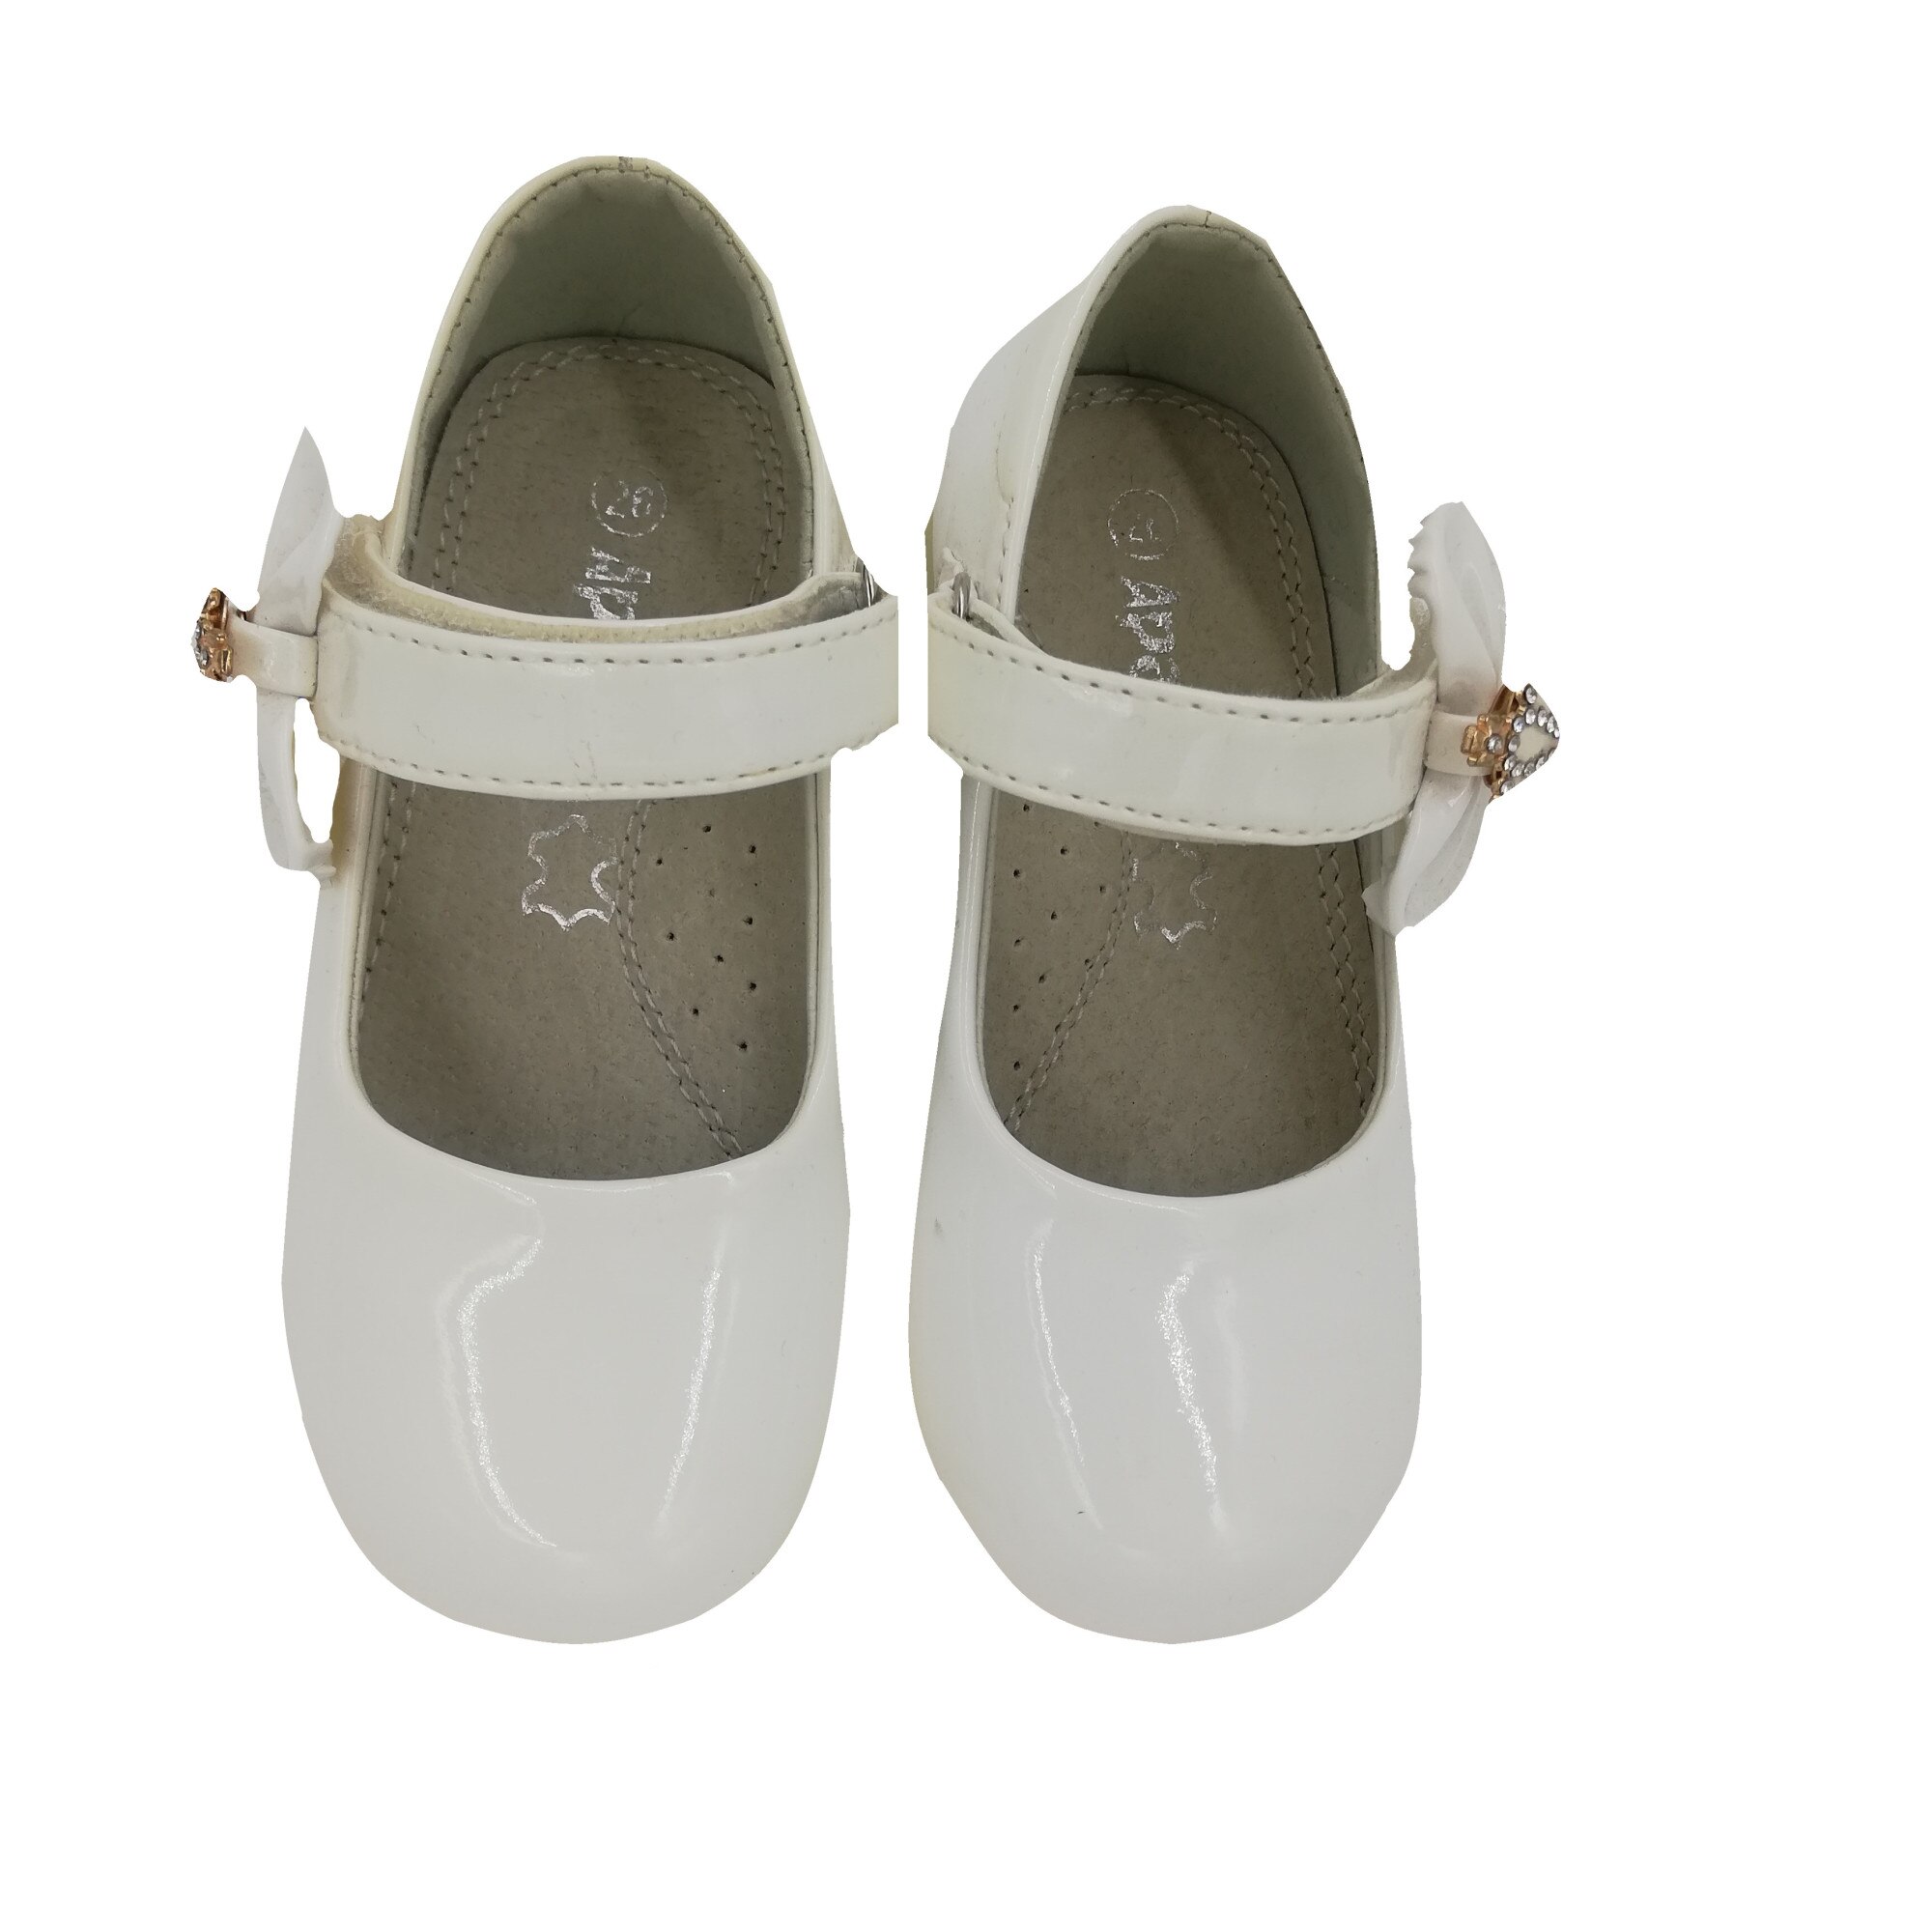 Glimpse Discomfort Instruct Pantofi fetite albi, marimea 27, 5 ani, lungime talpa 15.5 cm - eMAG.ro